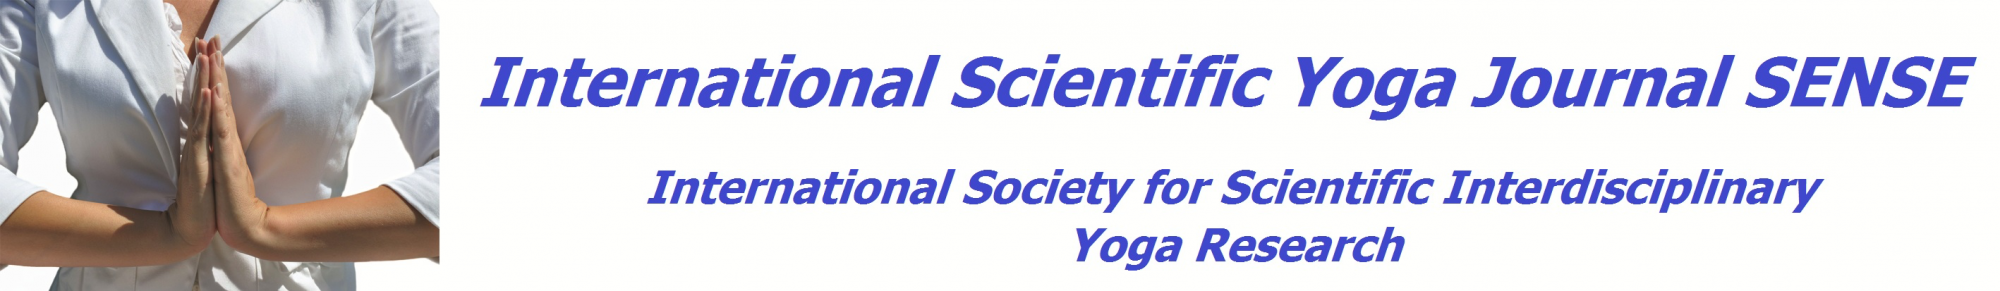 International Society for Scientific Interdisciplinary Yoga Research